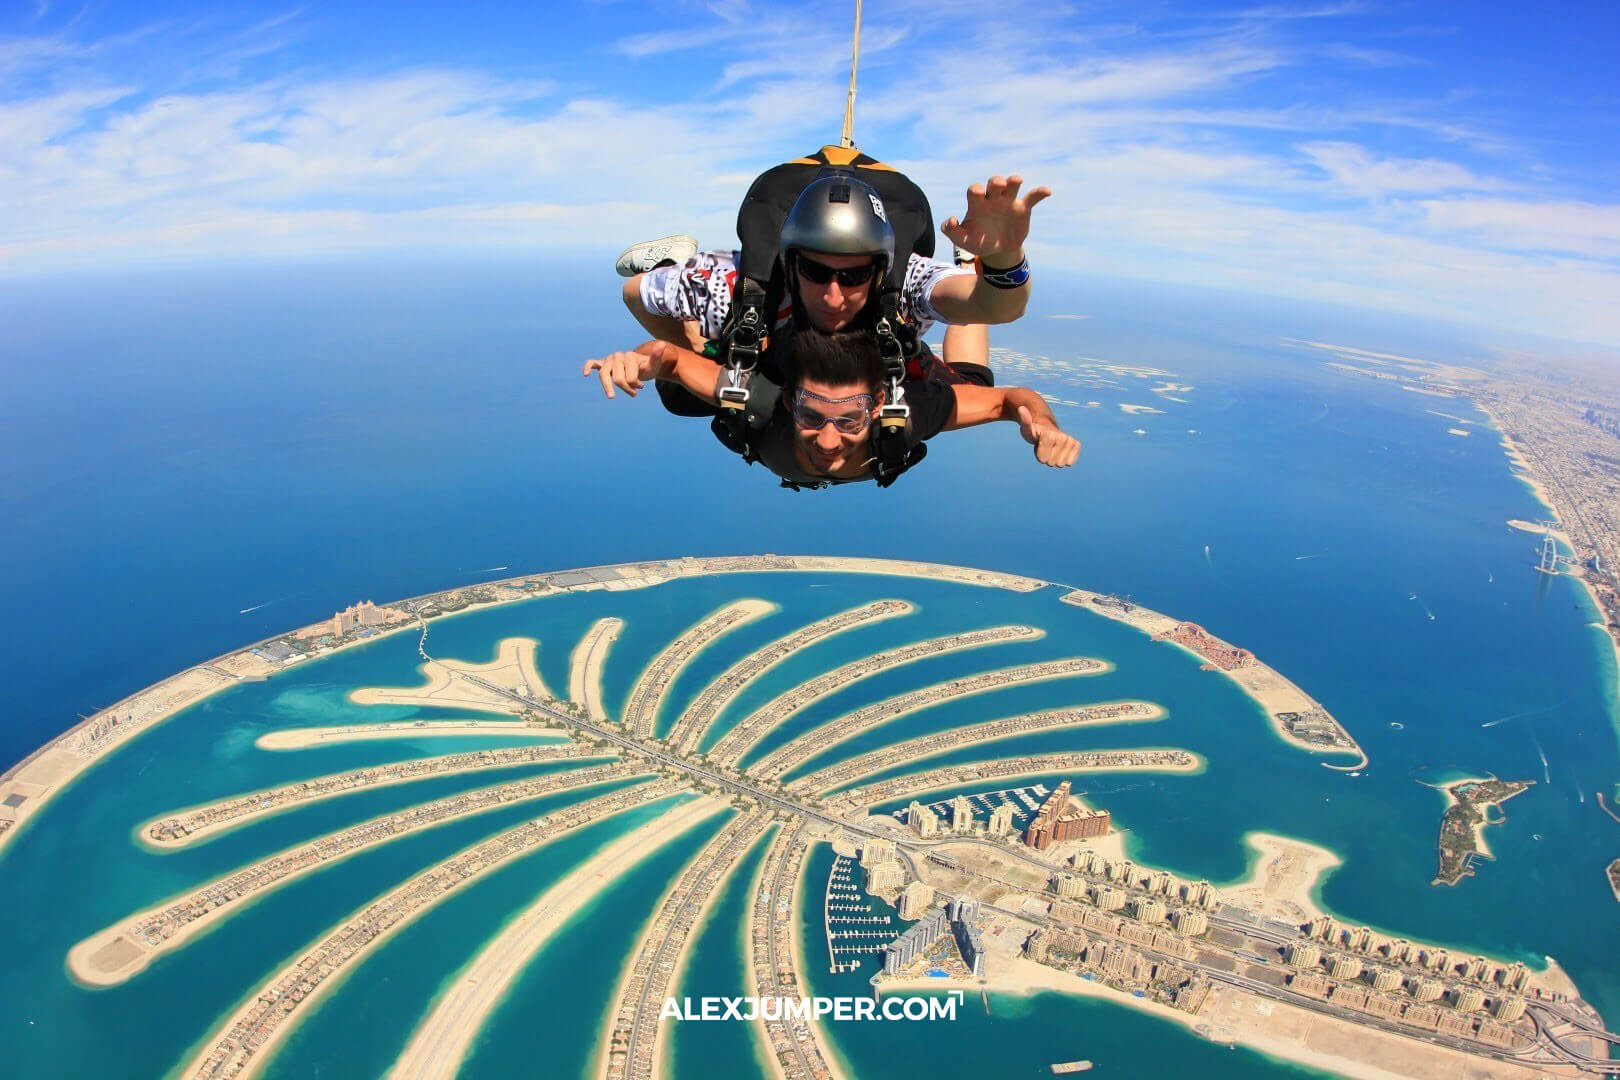 teletransportacion-posible-24horas-skydiving-dubai-alex-jumper